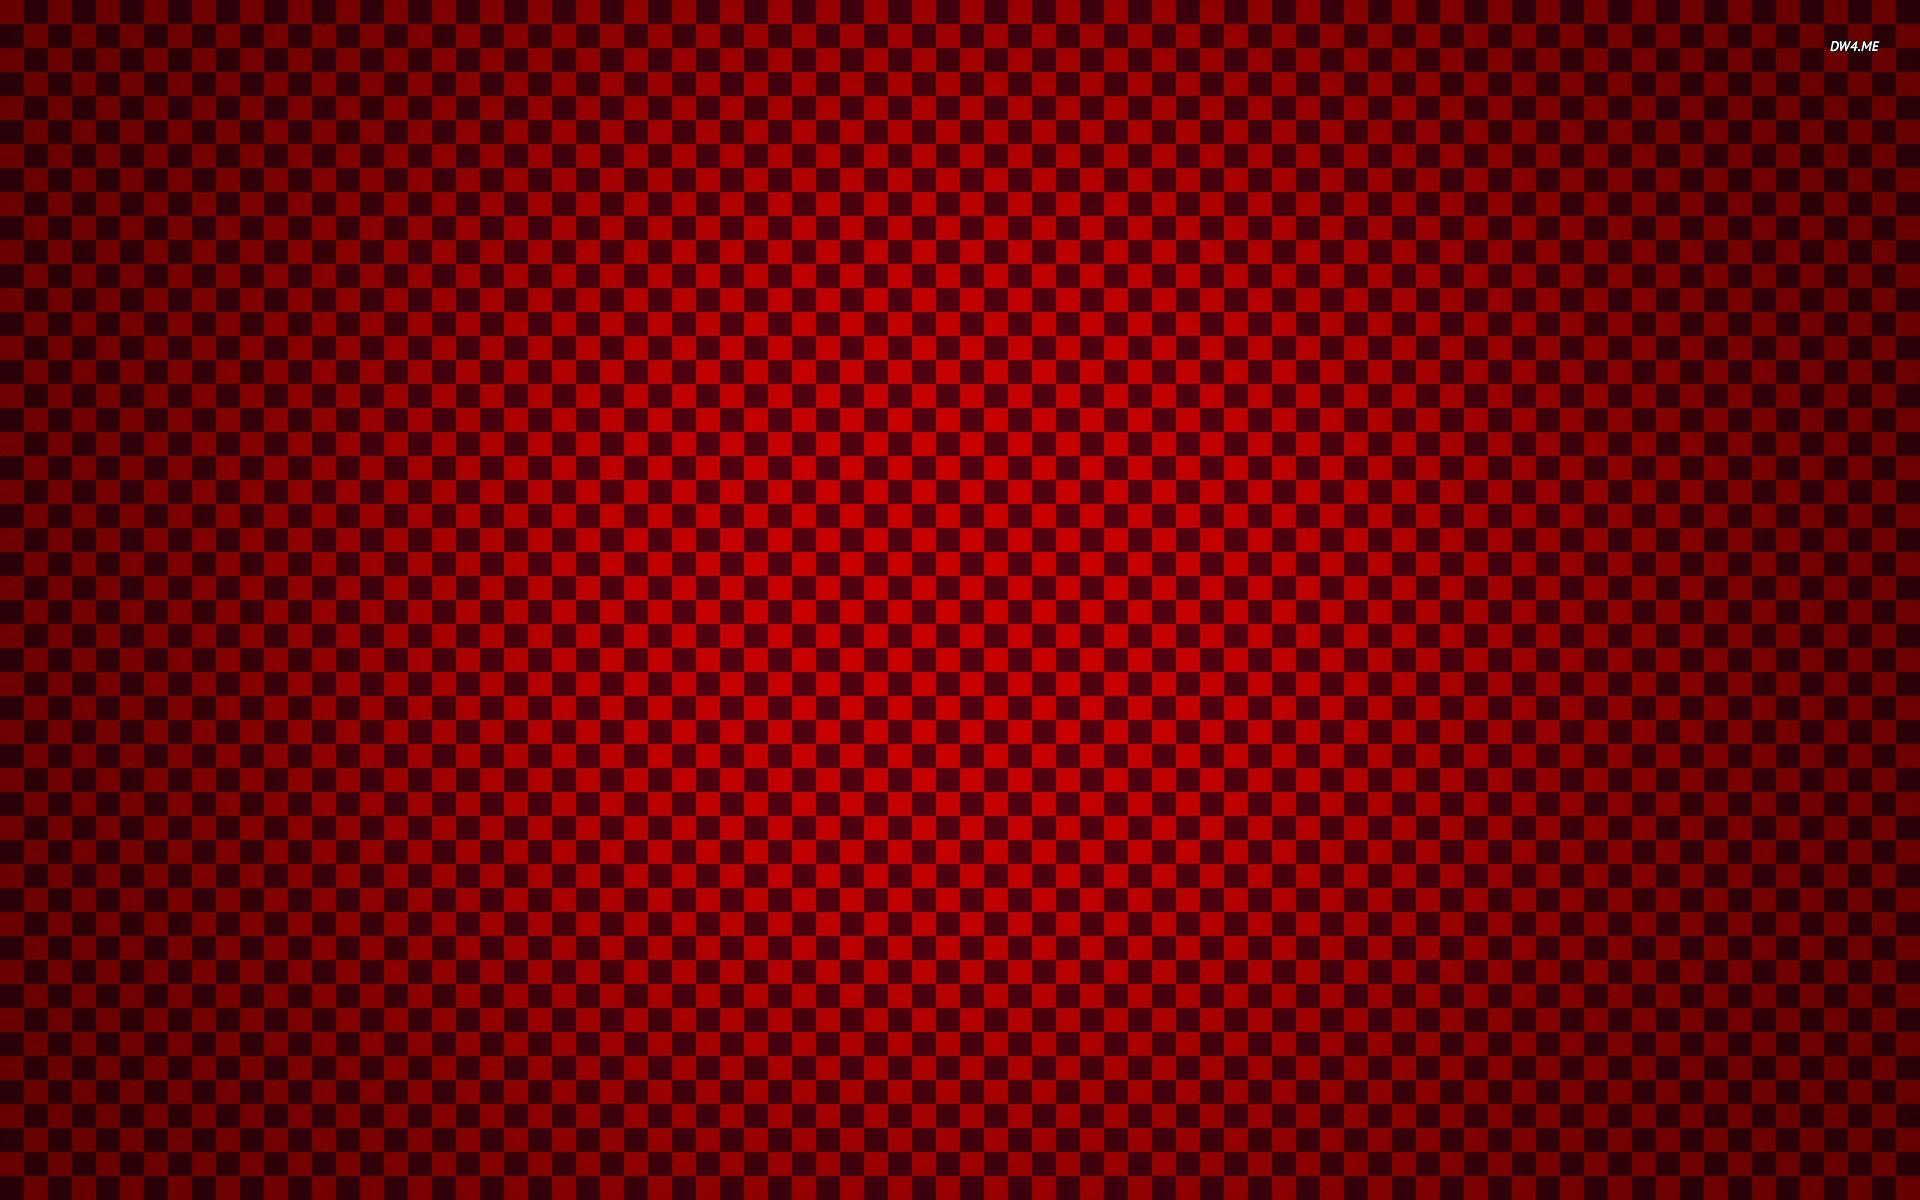 Red Carbon Fiber Wallpapers - Wallpaper Cave